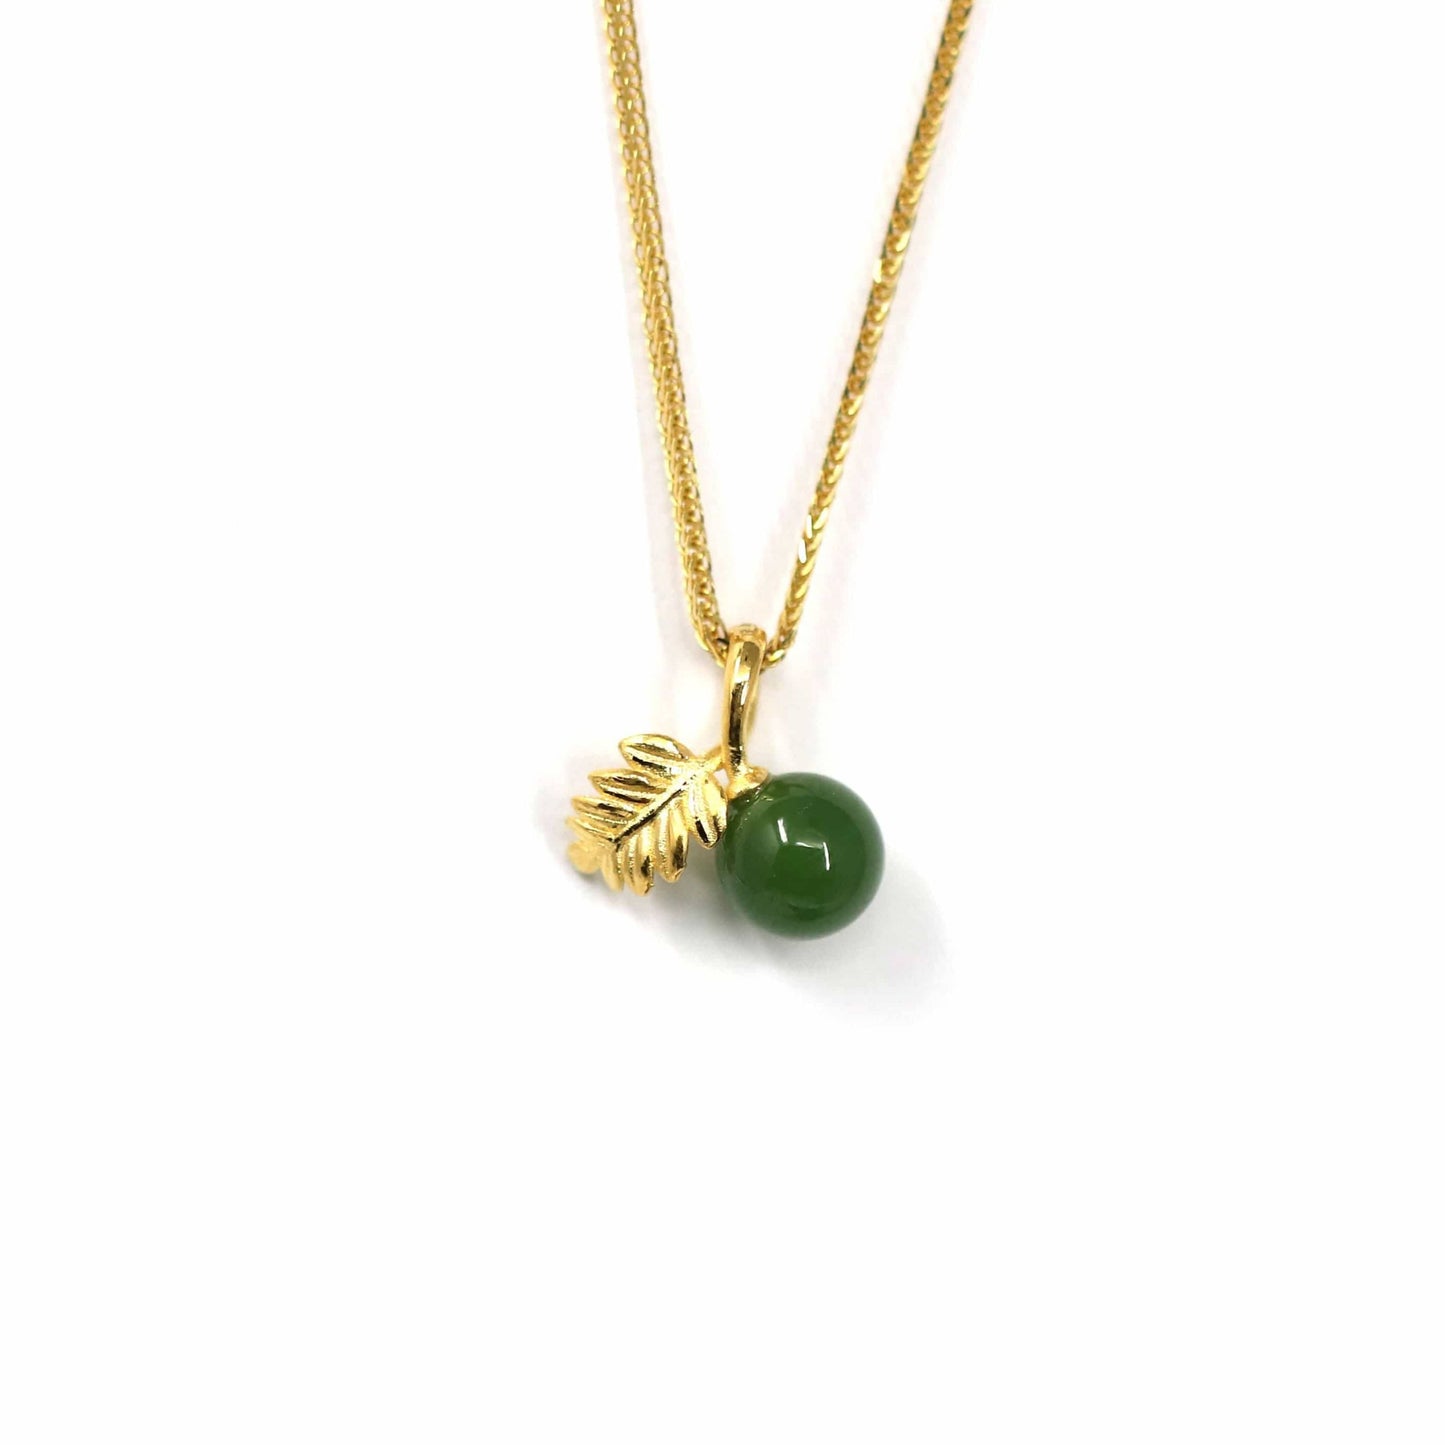 Load image into Gallery viewer, RealJade Natural Jadeite, Nephrite Jade Jewelry. Authentic, Grade-A Jade
